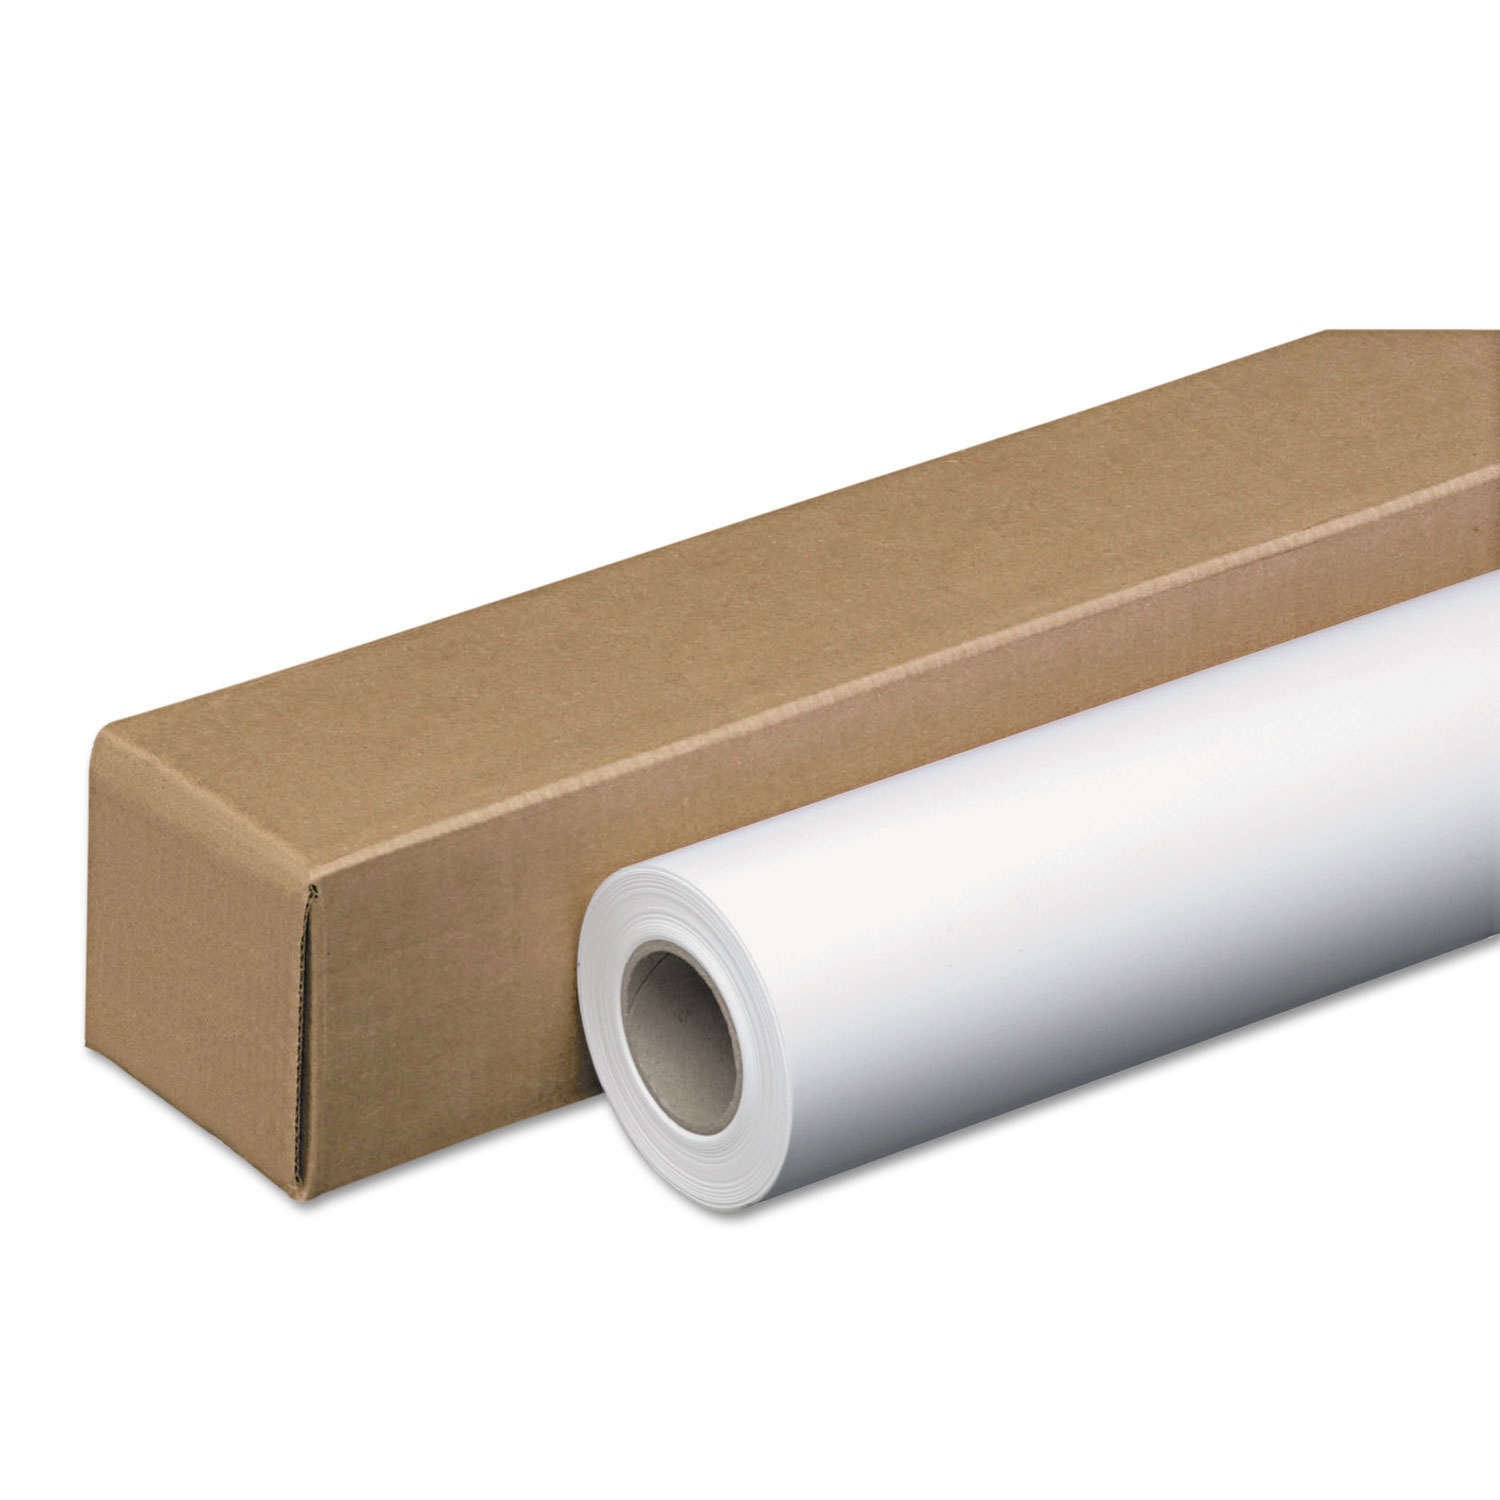  Iconex 46300 Amerigo Wide-Format Paper, 2 Core, 24 lb, 36 x 300 ft, Coated White (ICX90750219) 